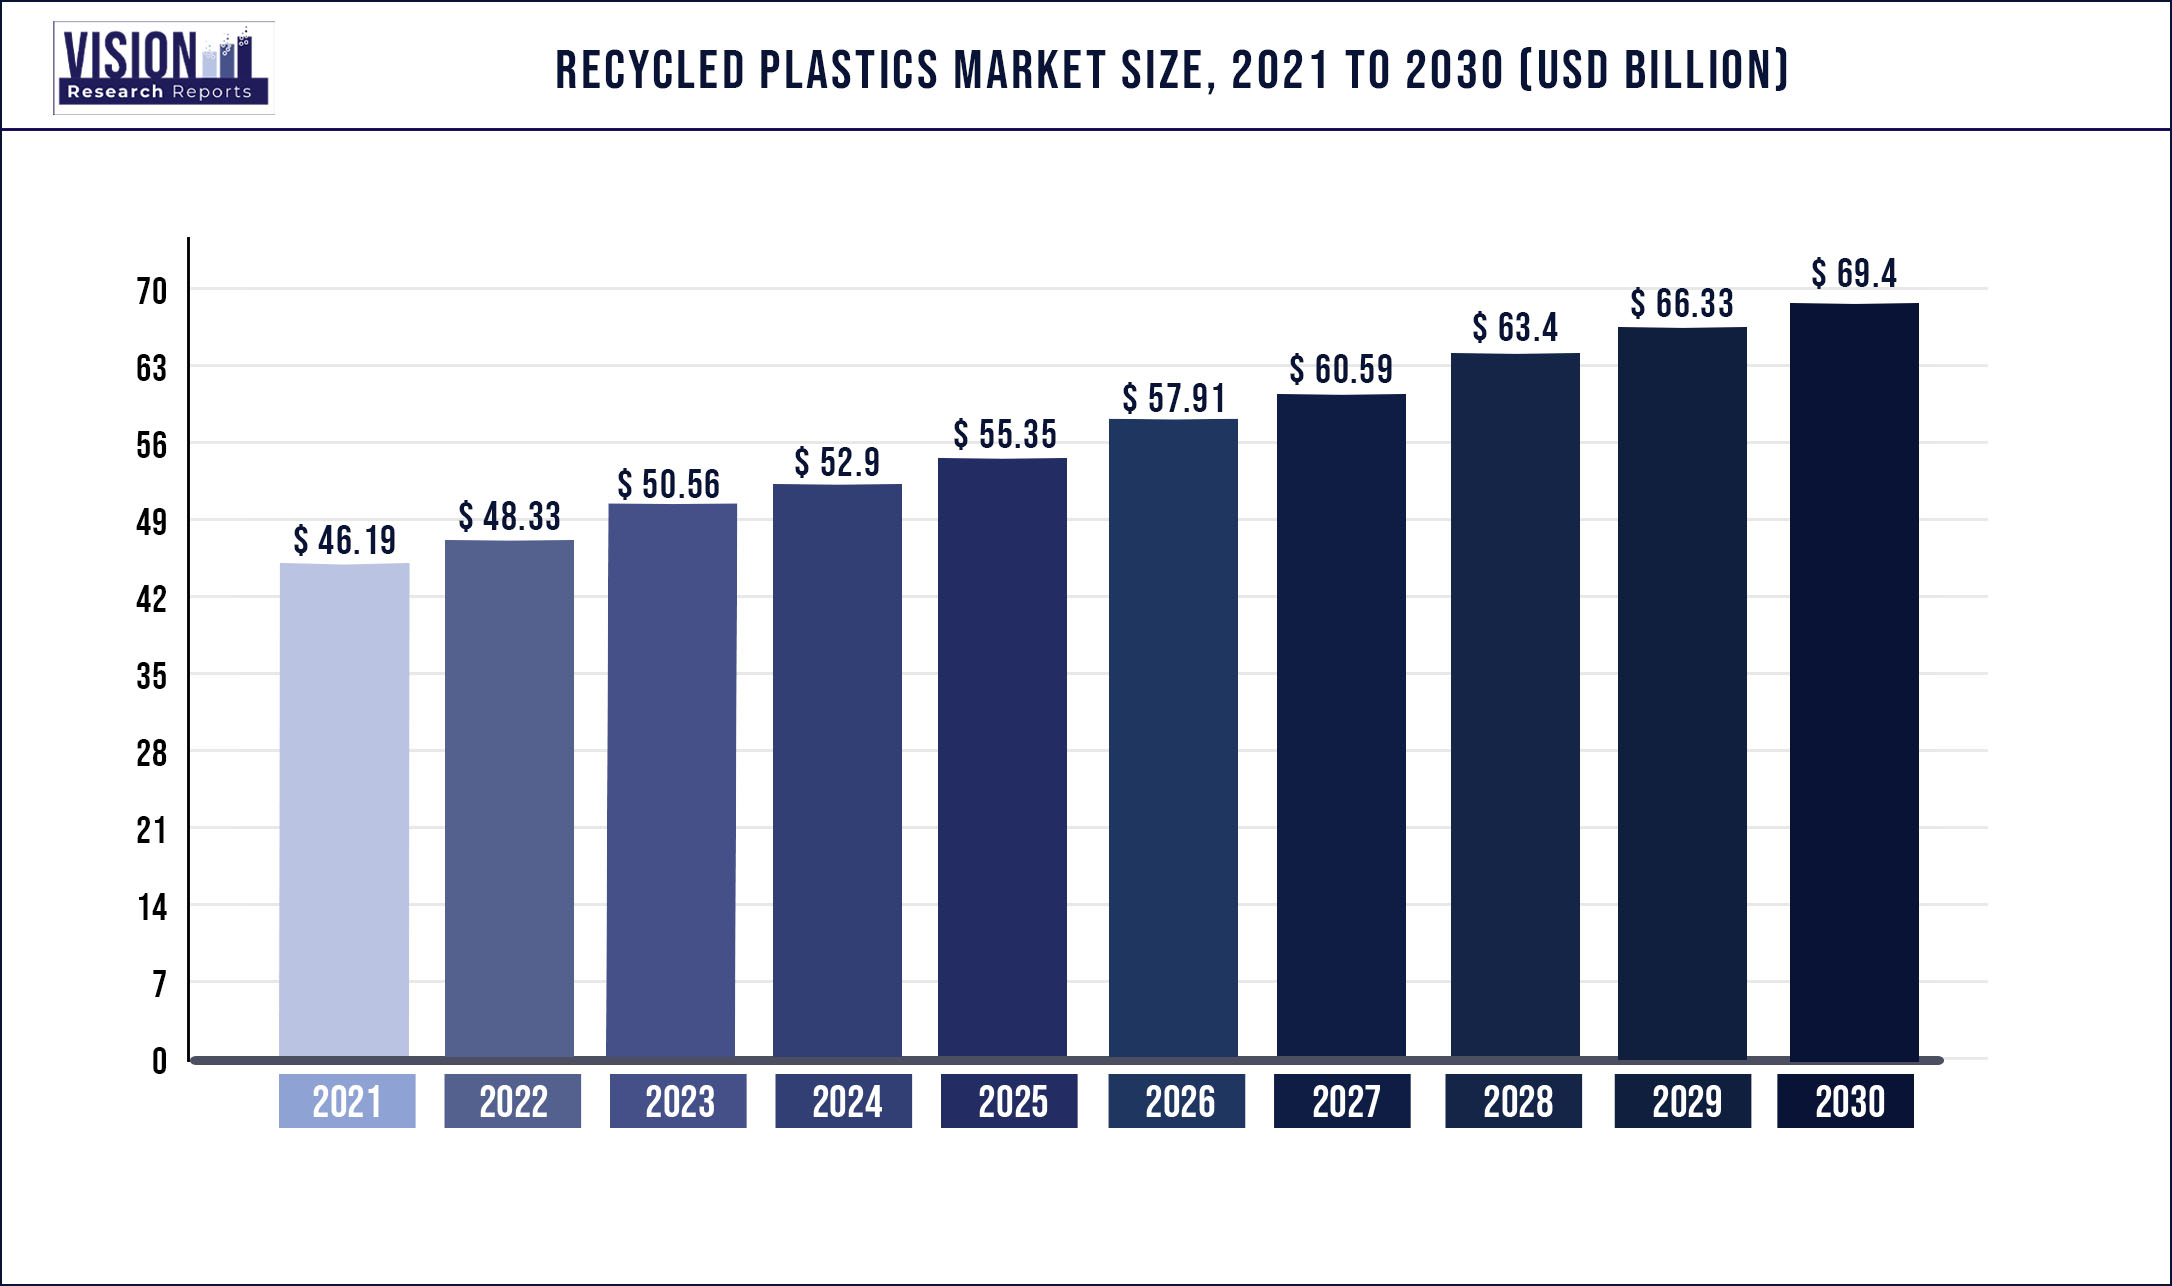 Recycled Plastics Market Size 2021 to 2030